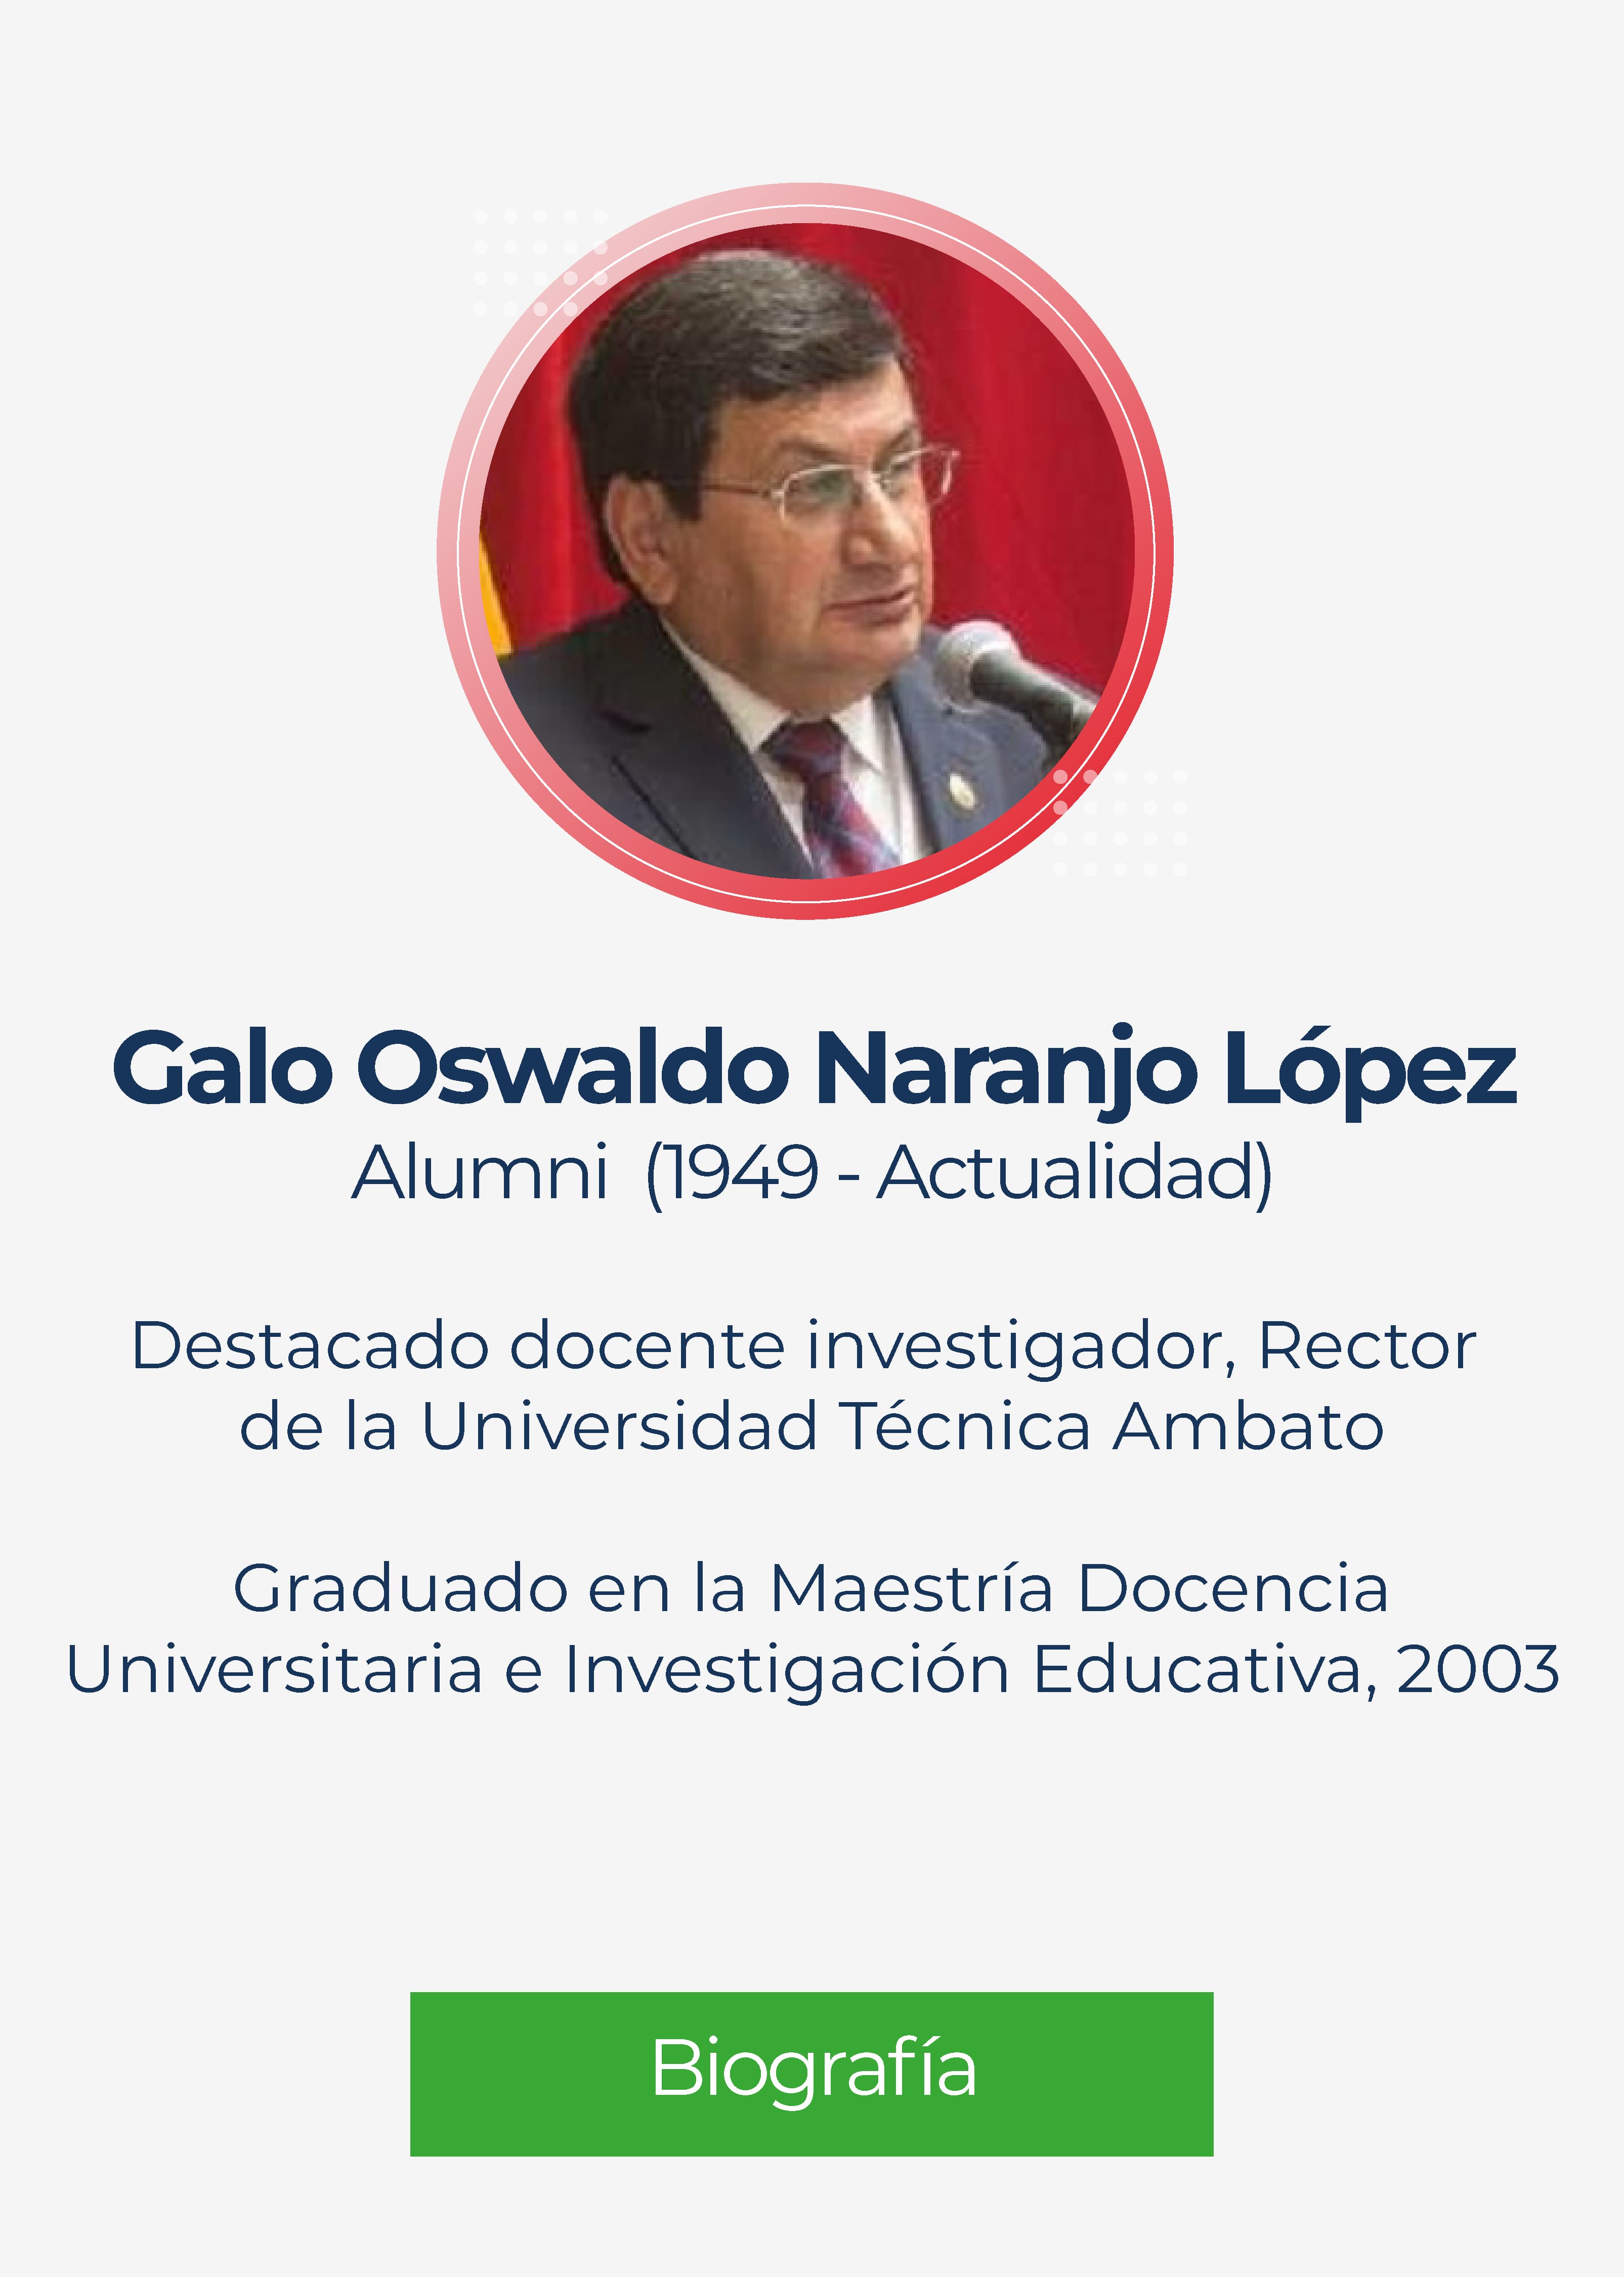 Galo Oswaldo Naranjo Lopez